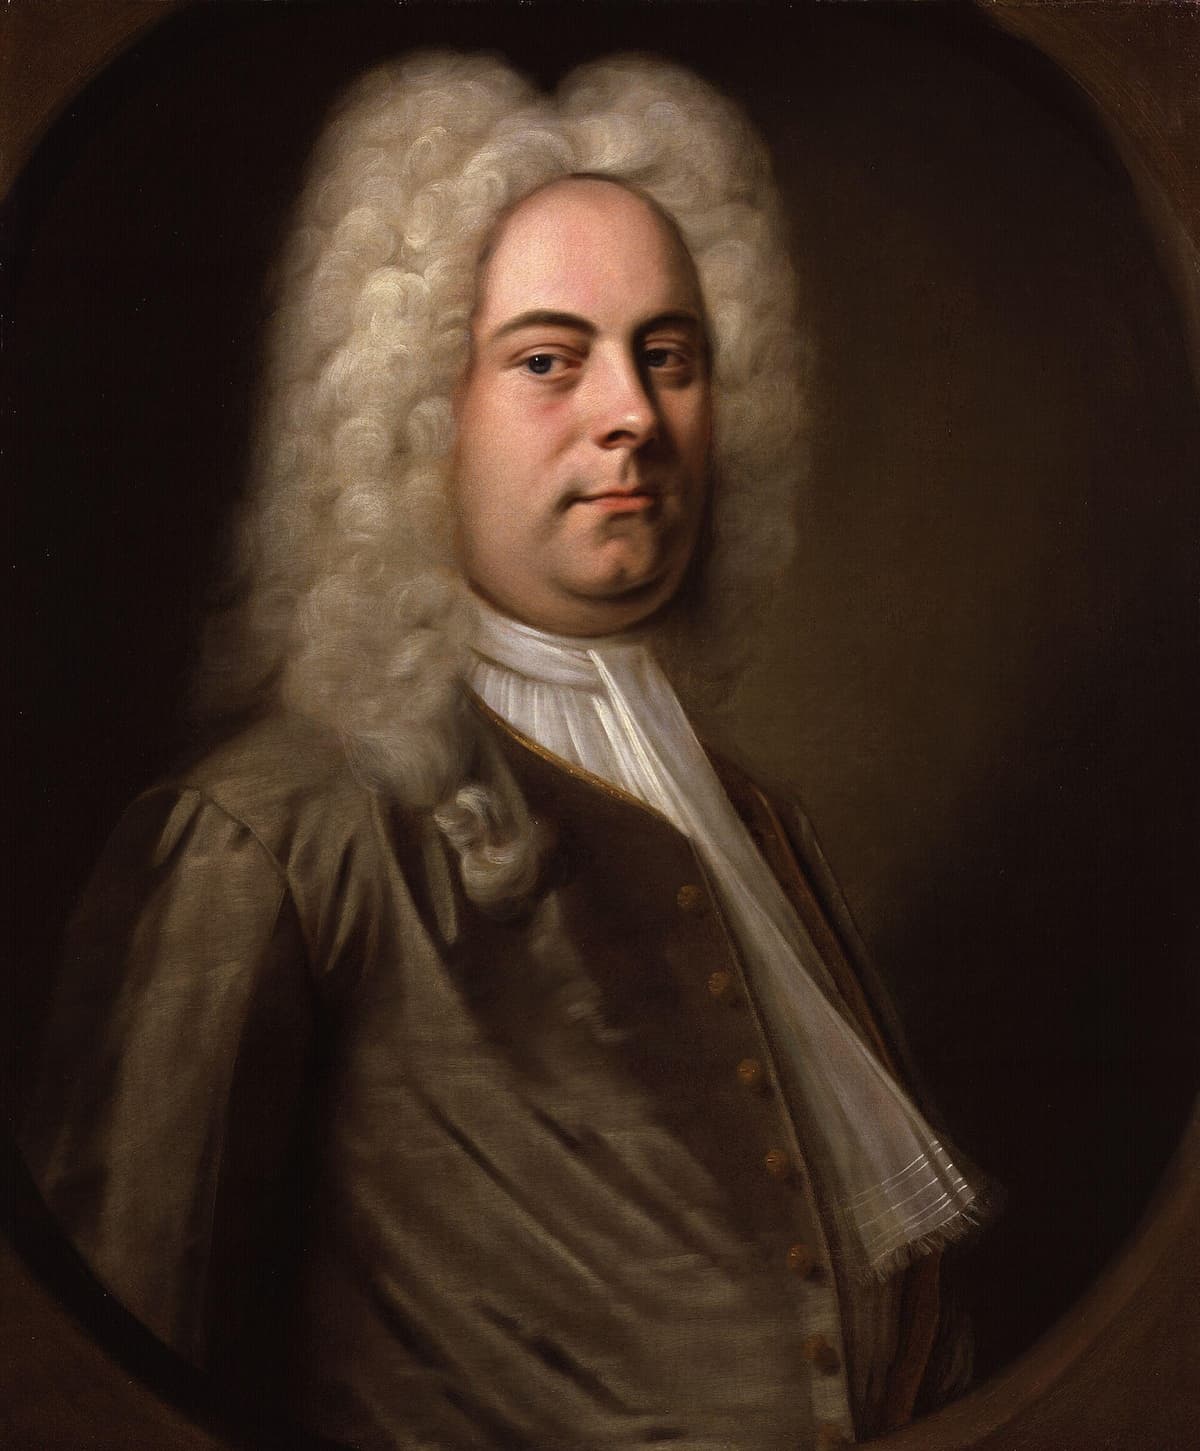 Bathasar Denner: George Frideric Handel, ca. 1726